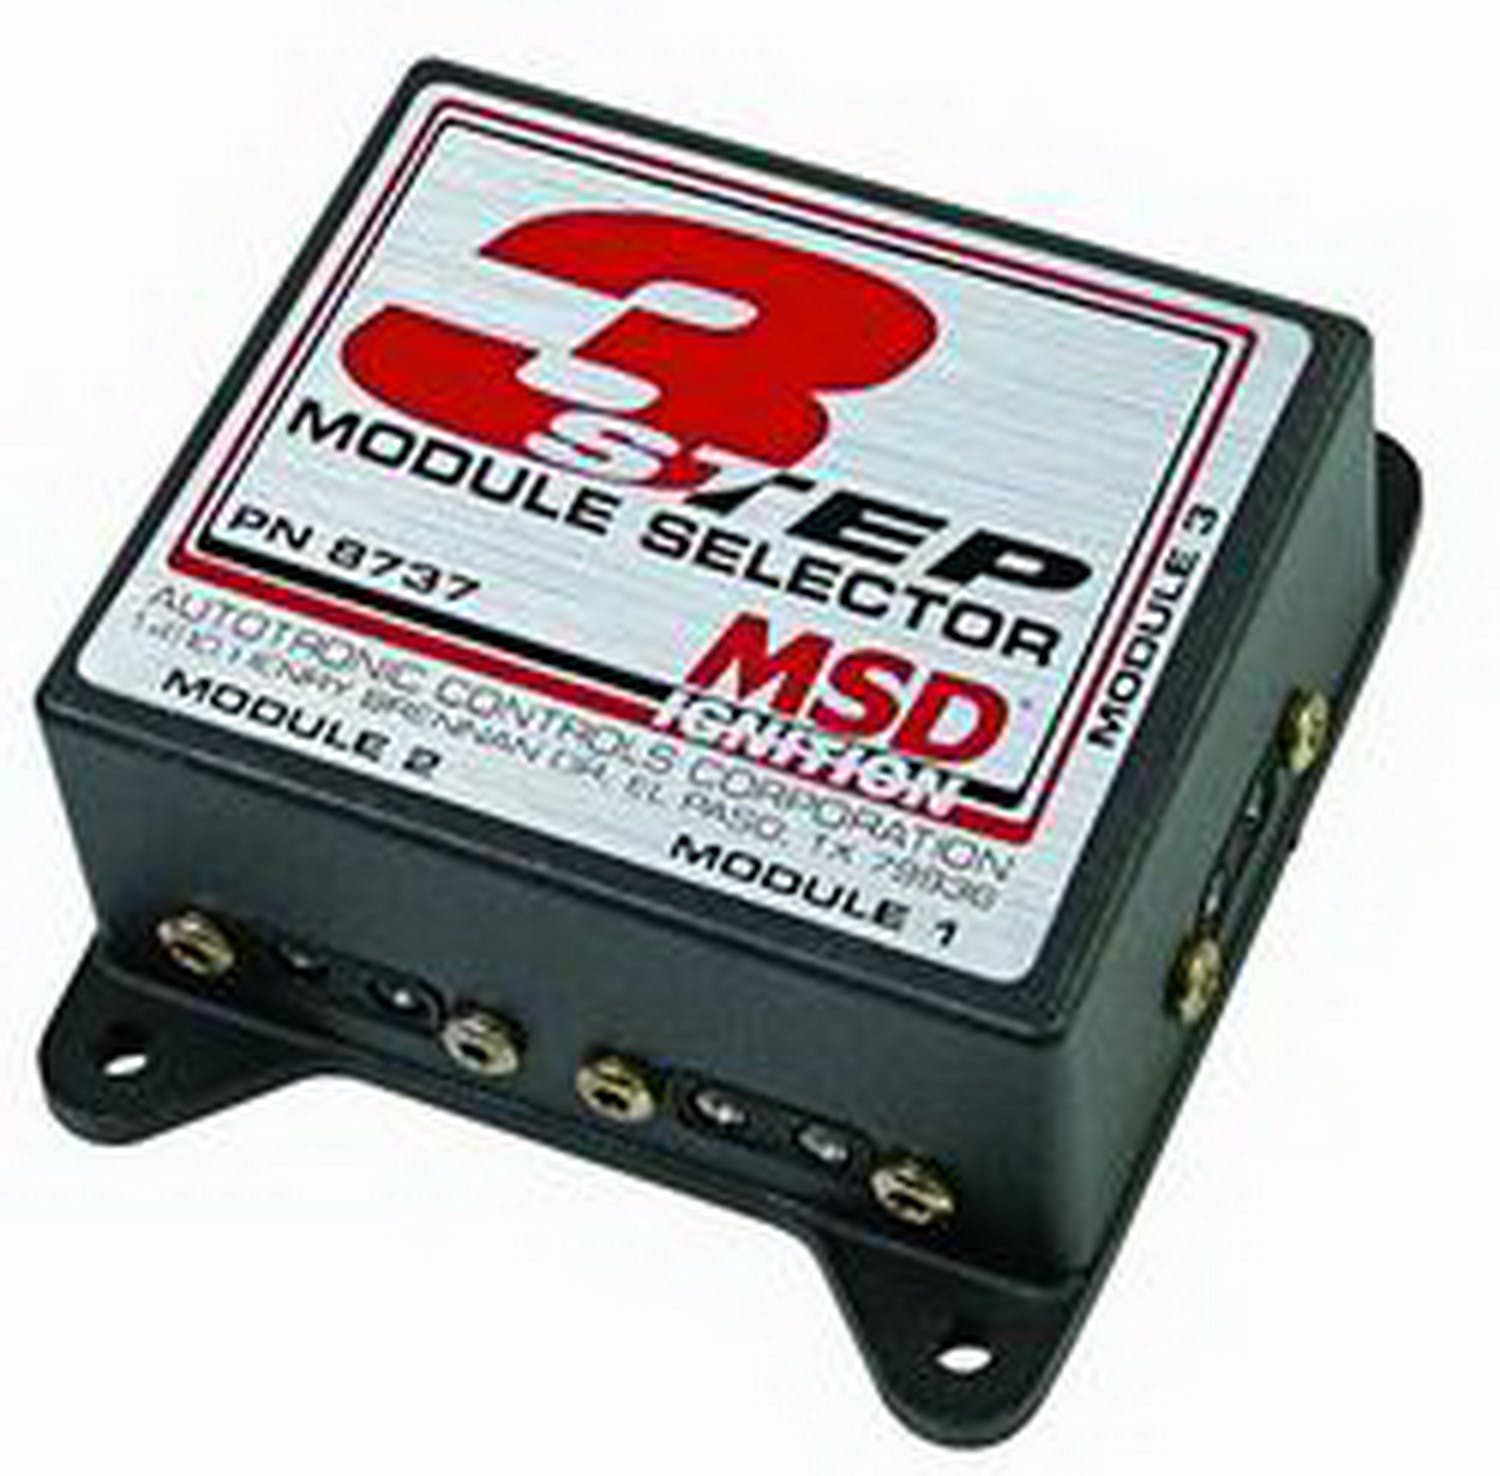 MSD Performance 8737 Three Step Module Selector